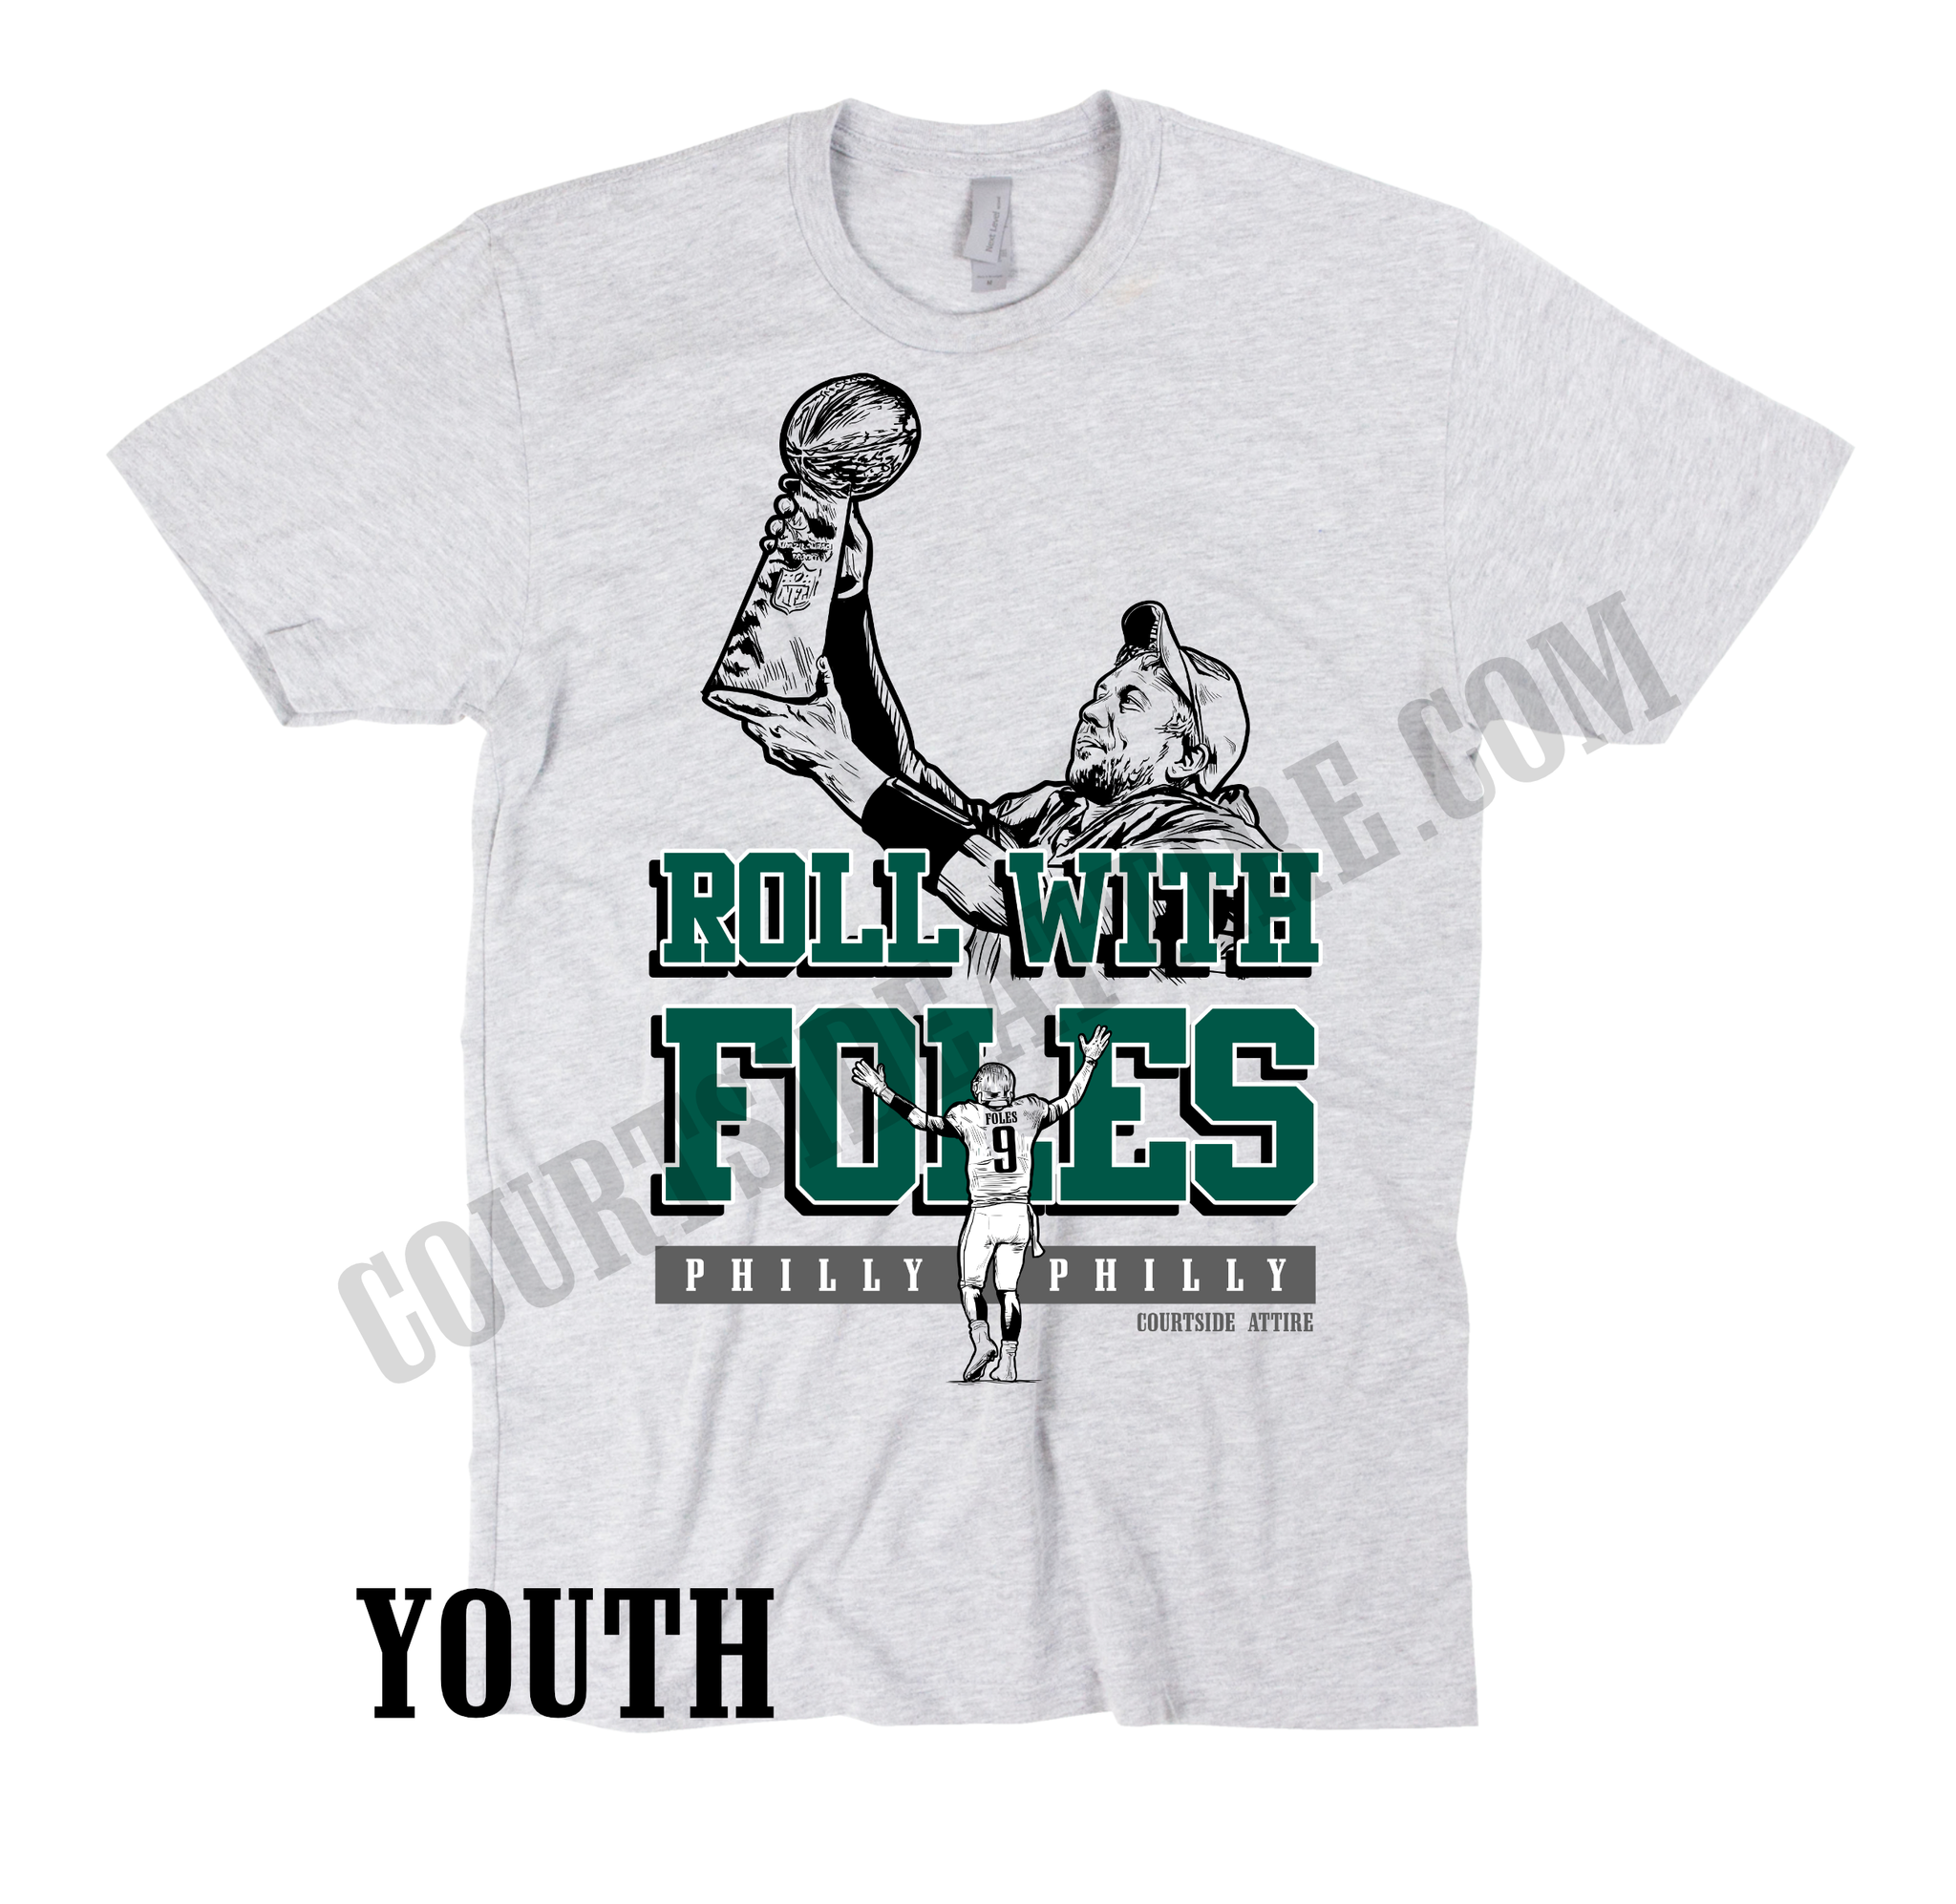 Nick Foles kids T shirt